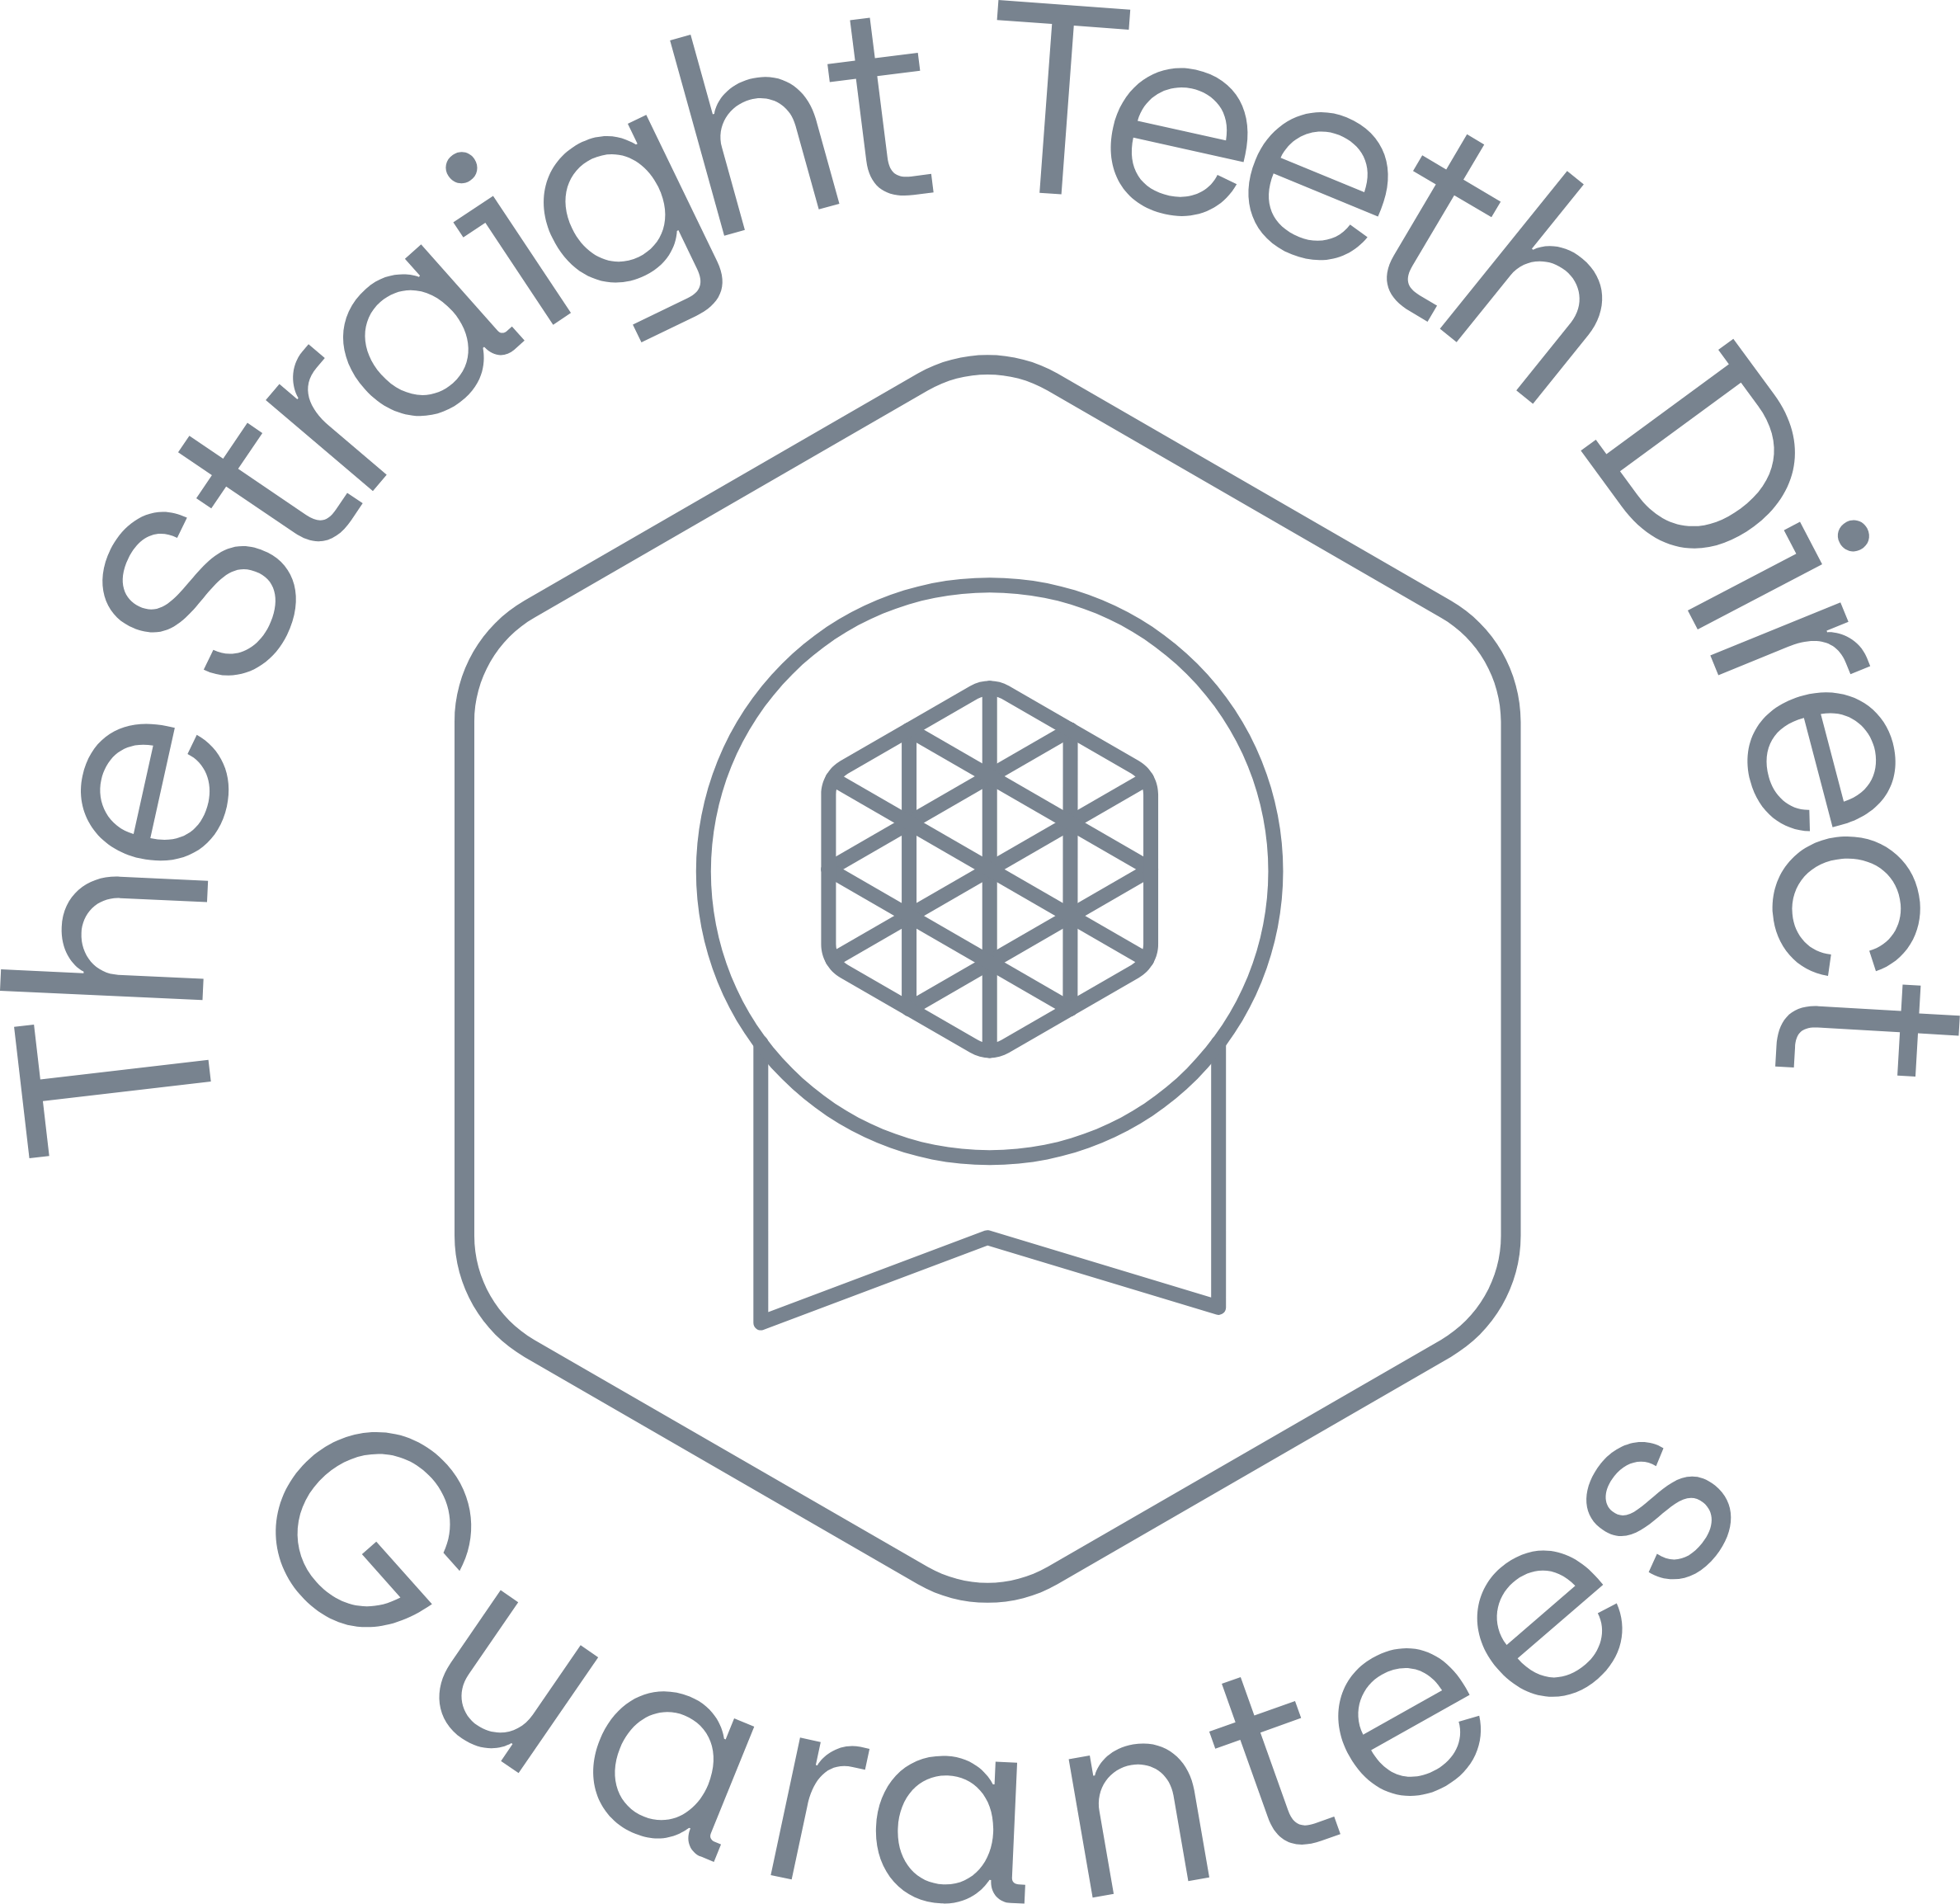 Straight teeth direct stamp of guarantee